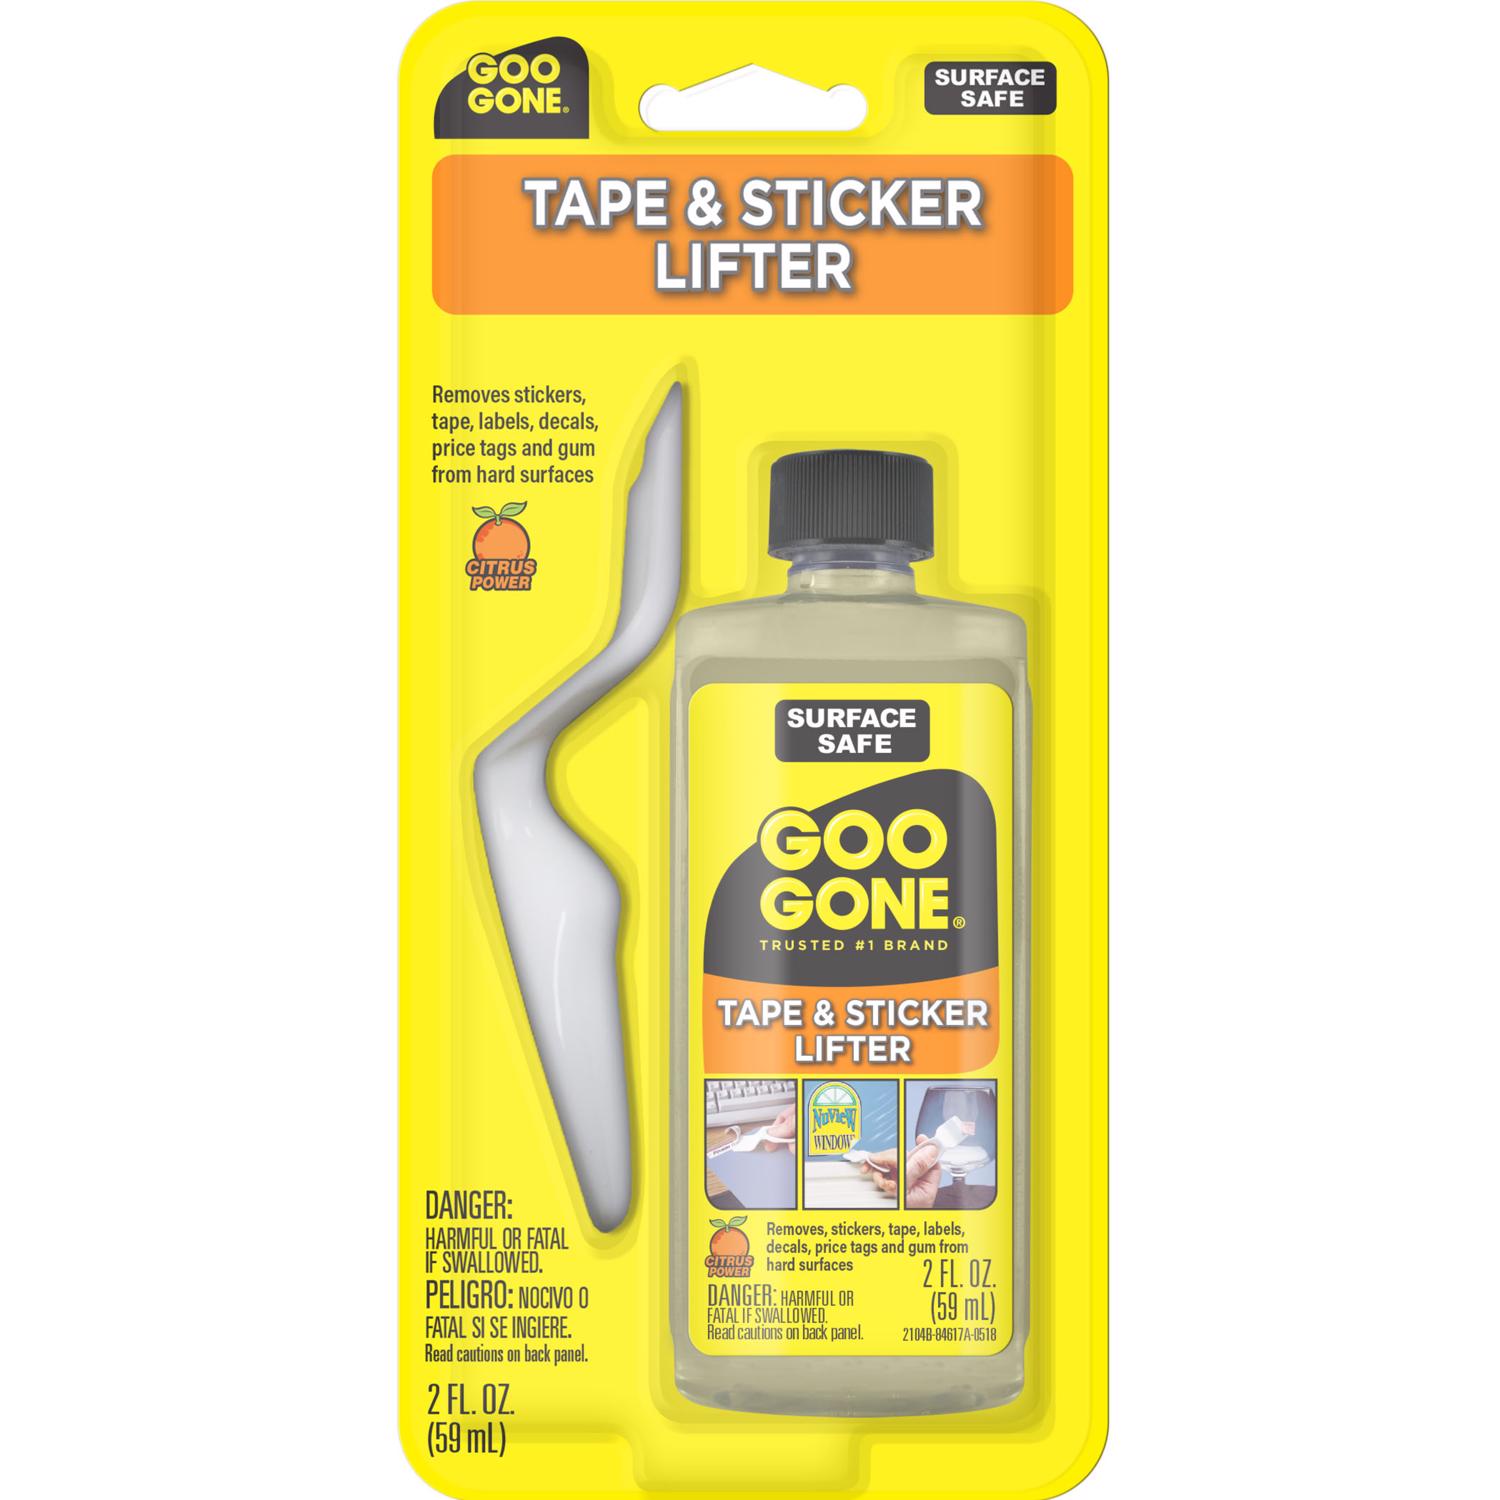 Goo Gone 32-fl oz Scented Liquid Adhesive Remover - Pro Power